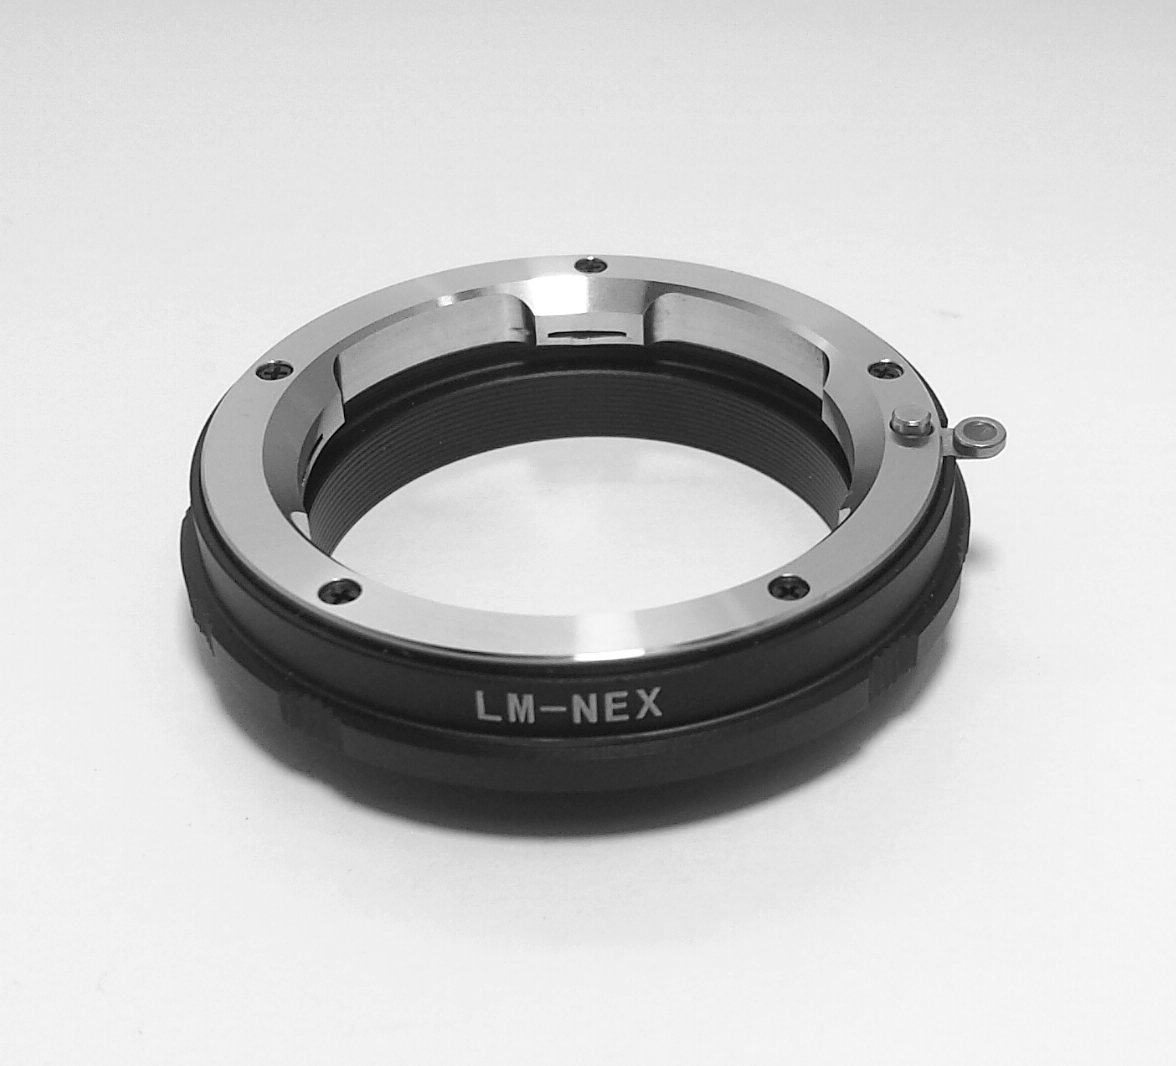 Leica M lens to Sony NEX Camera Body Adapter